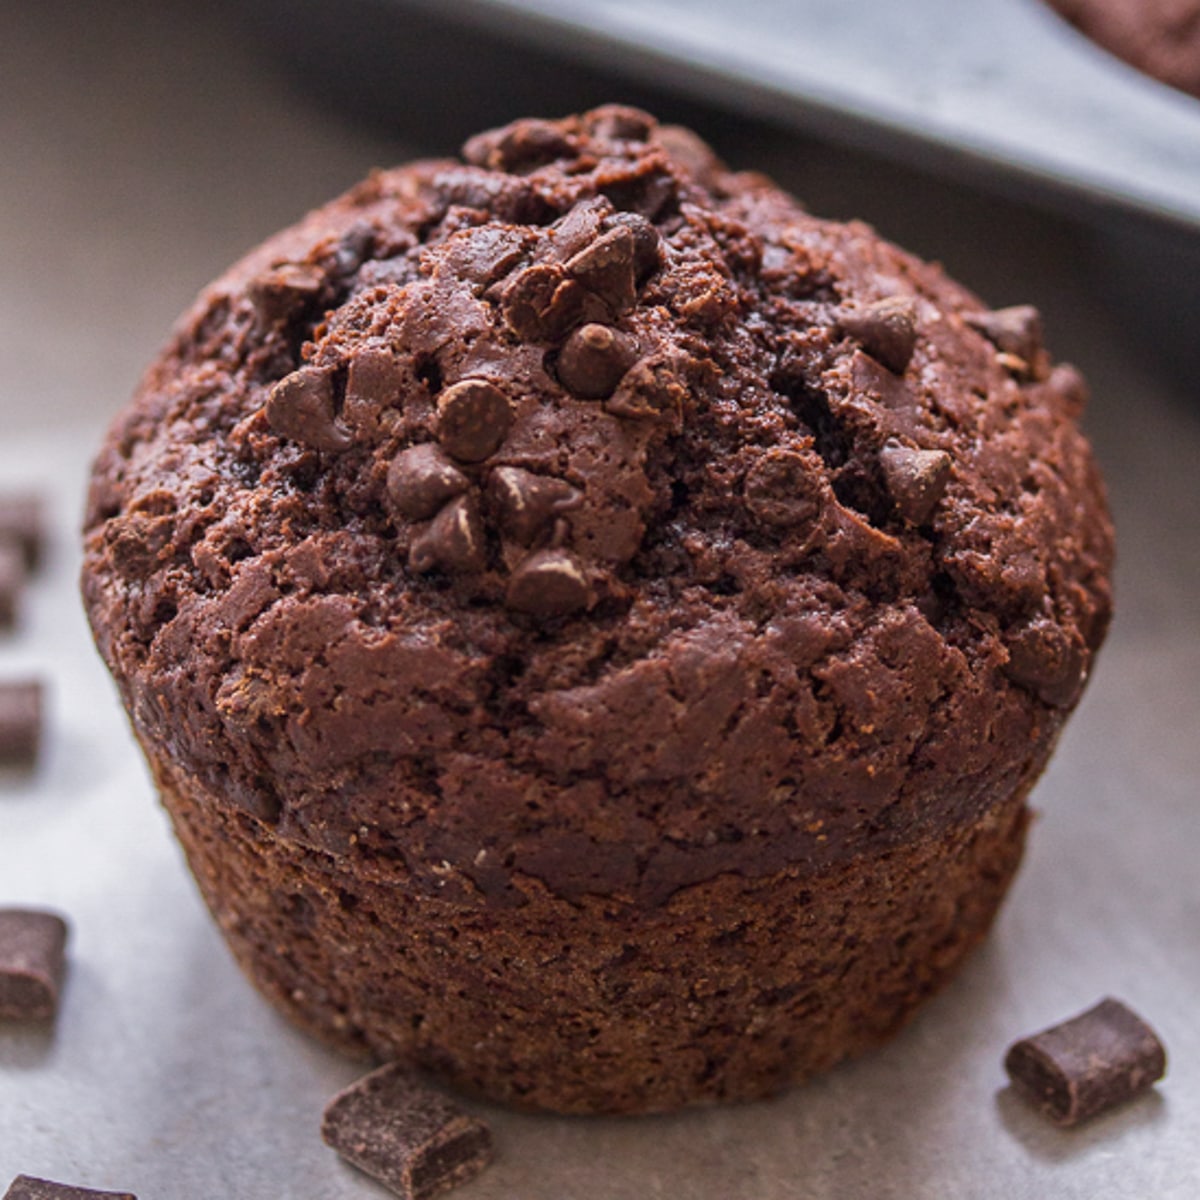 Chocolate muffin on a grey board.